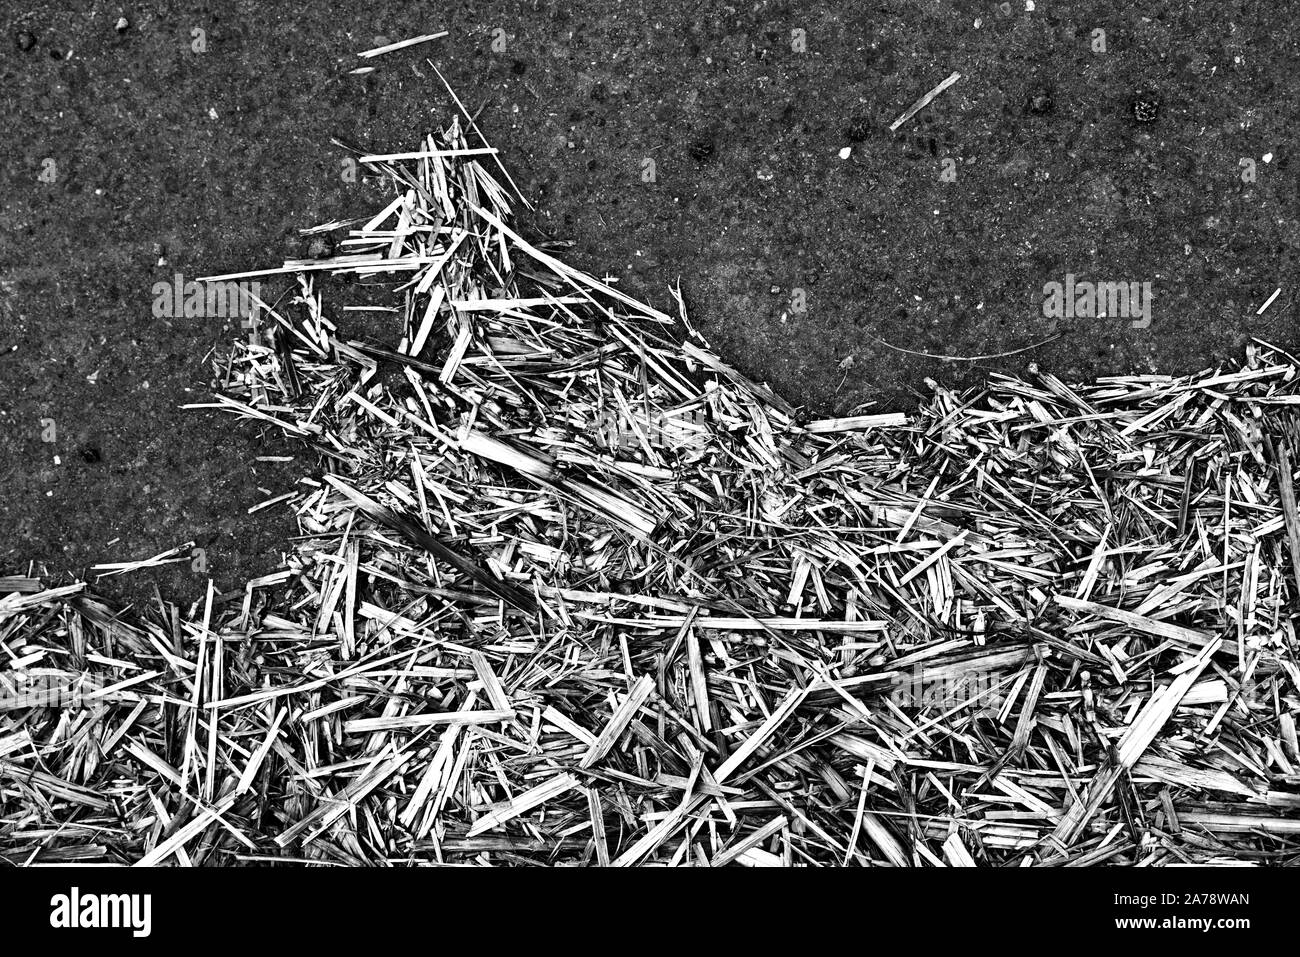 straw, old asphalt pavement Stock Photo